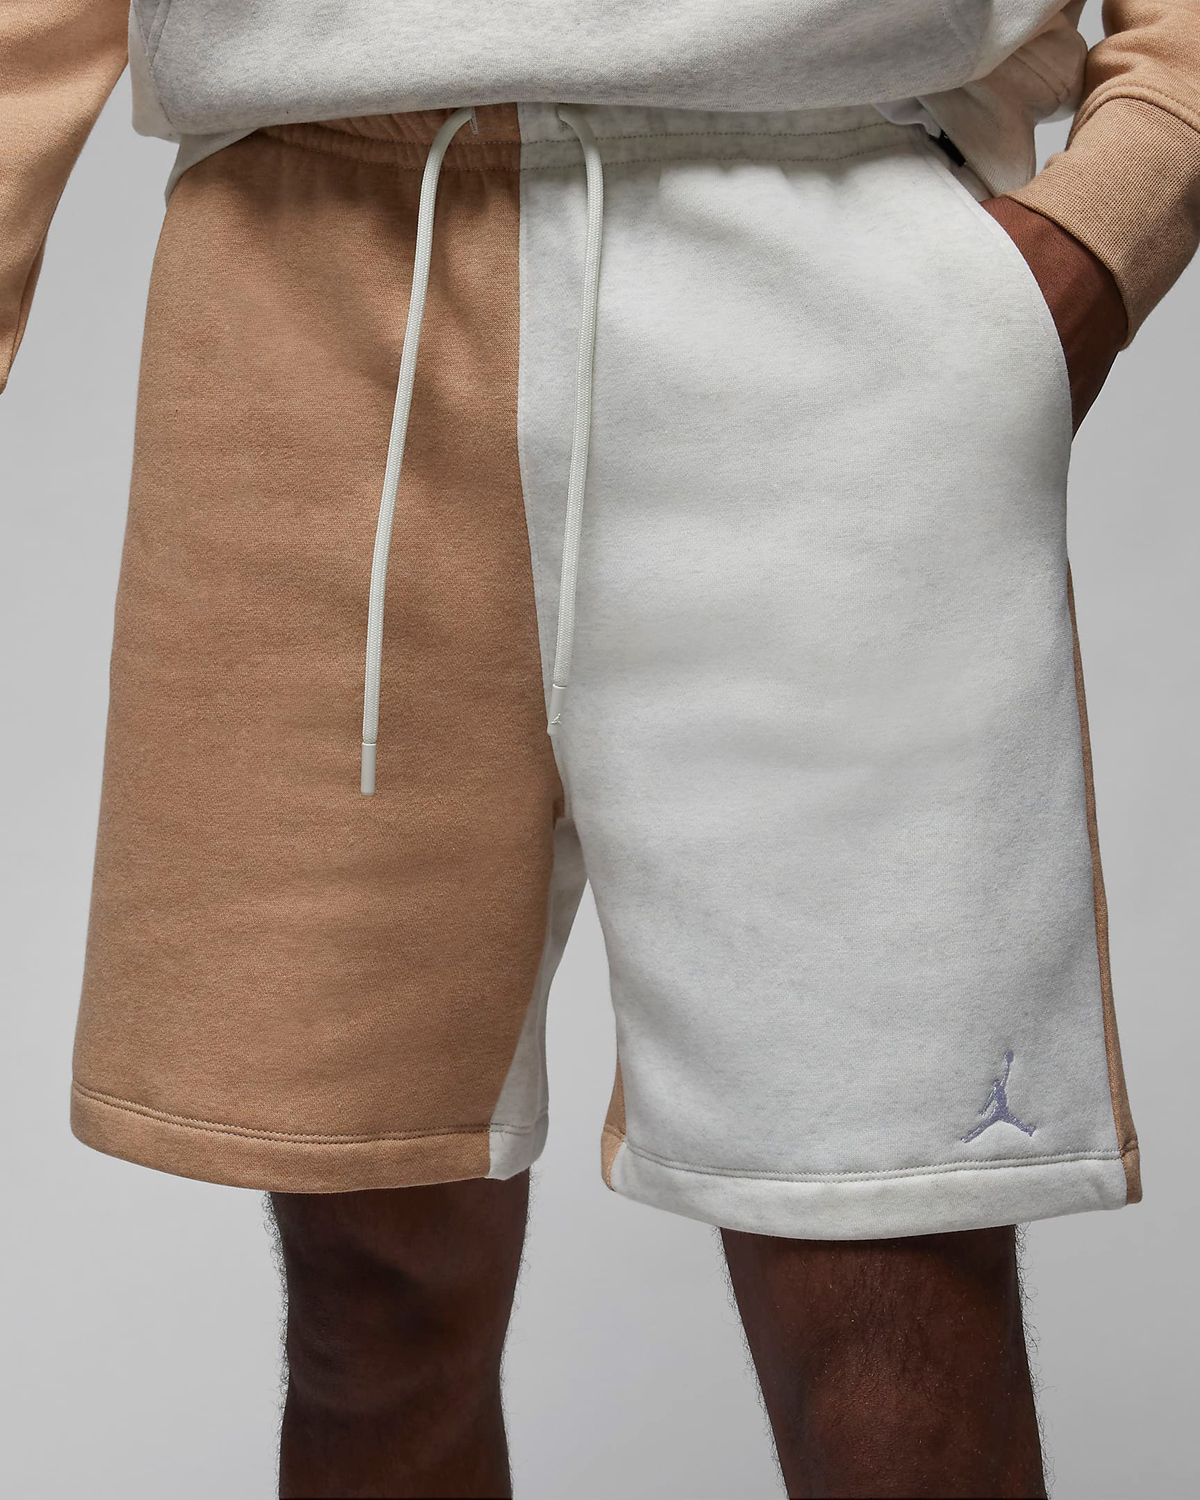 Jordan-Essentials-Fleece-Shorts-Hemp-Sail-White-2